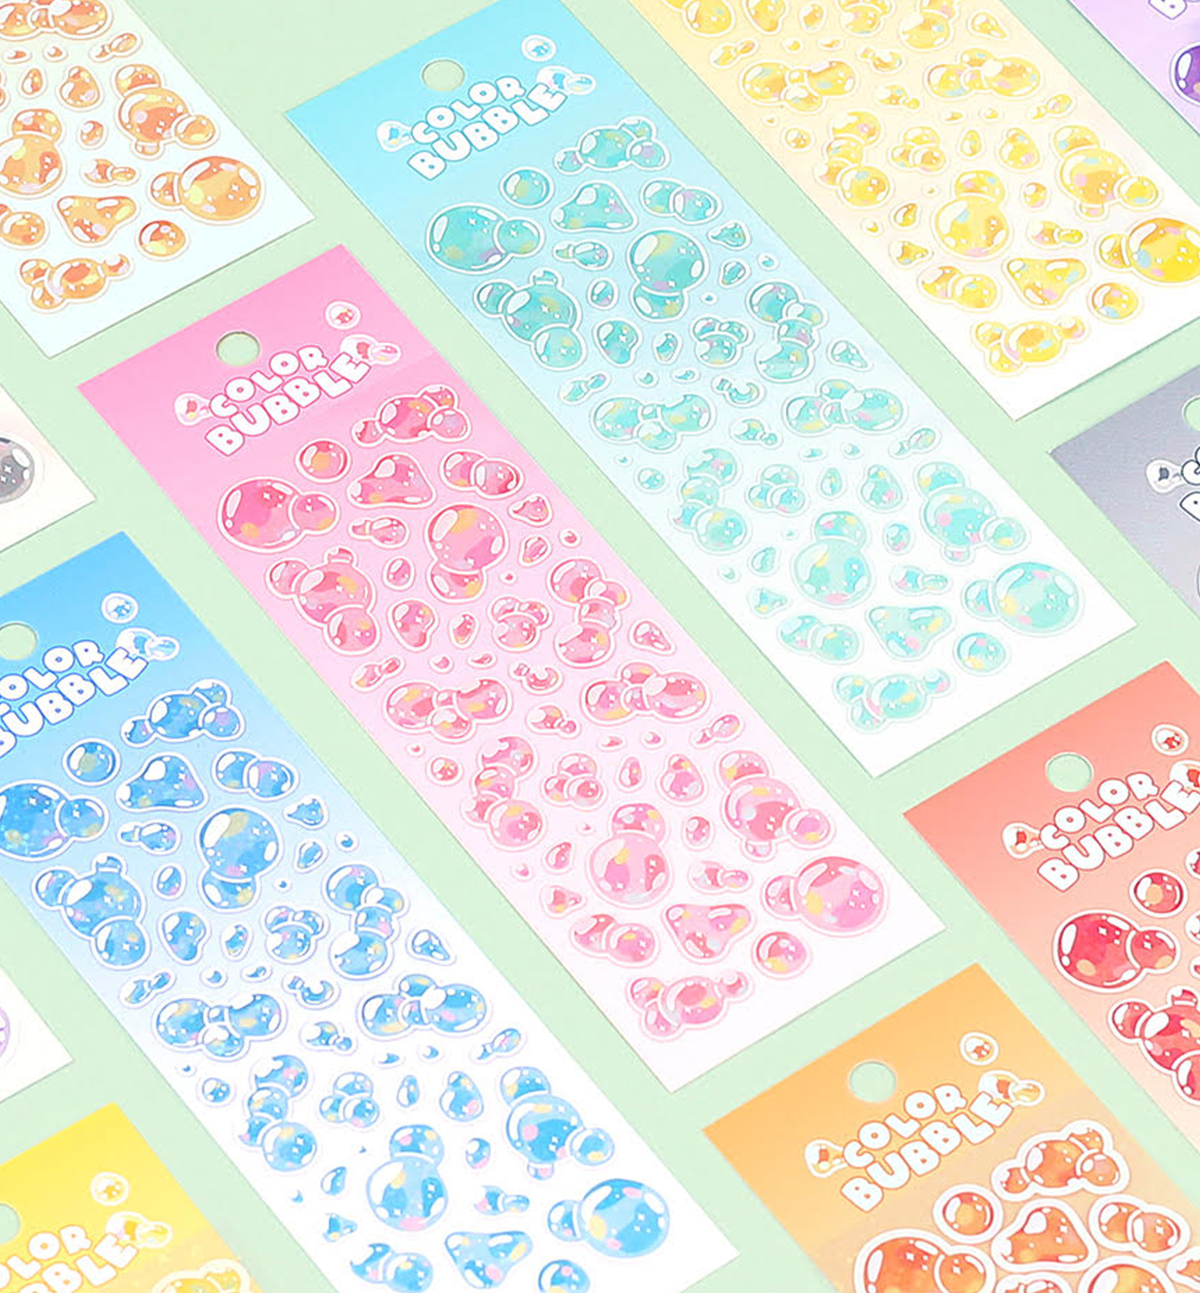 Color Bubble Seal Sticker [8 Colors]